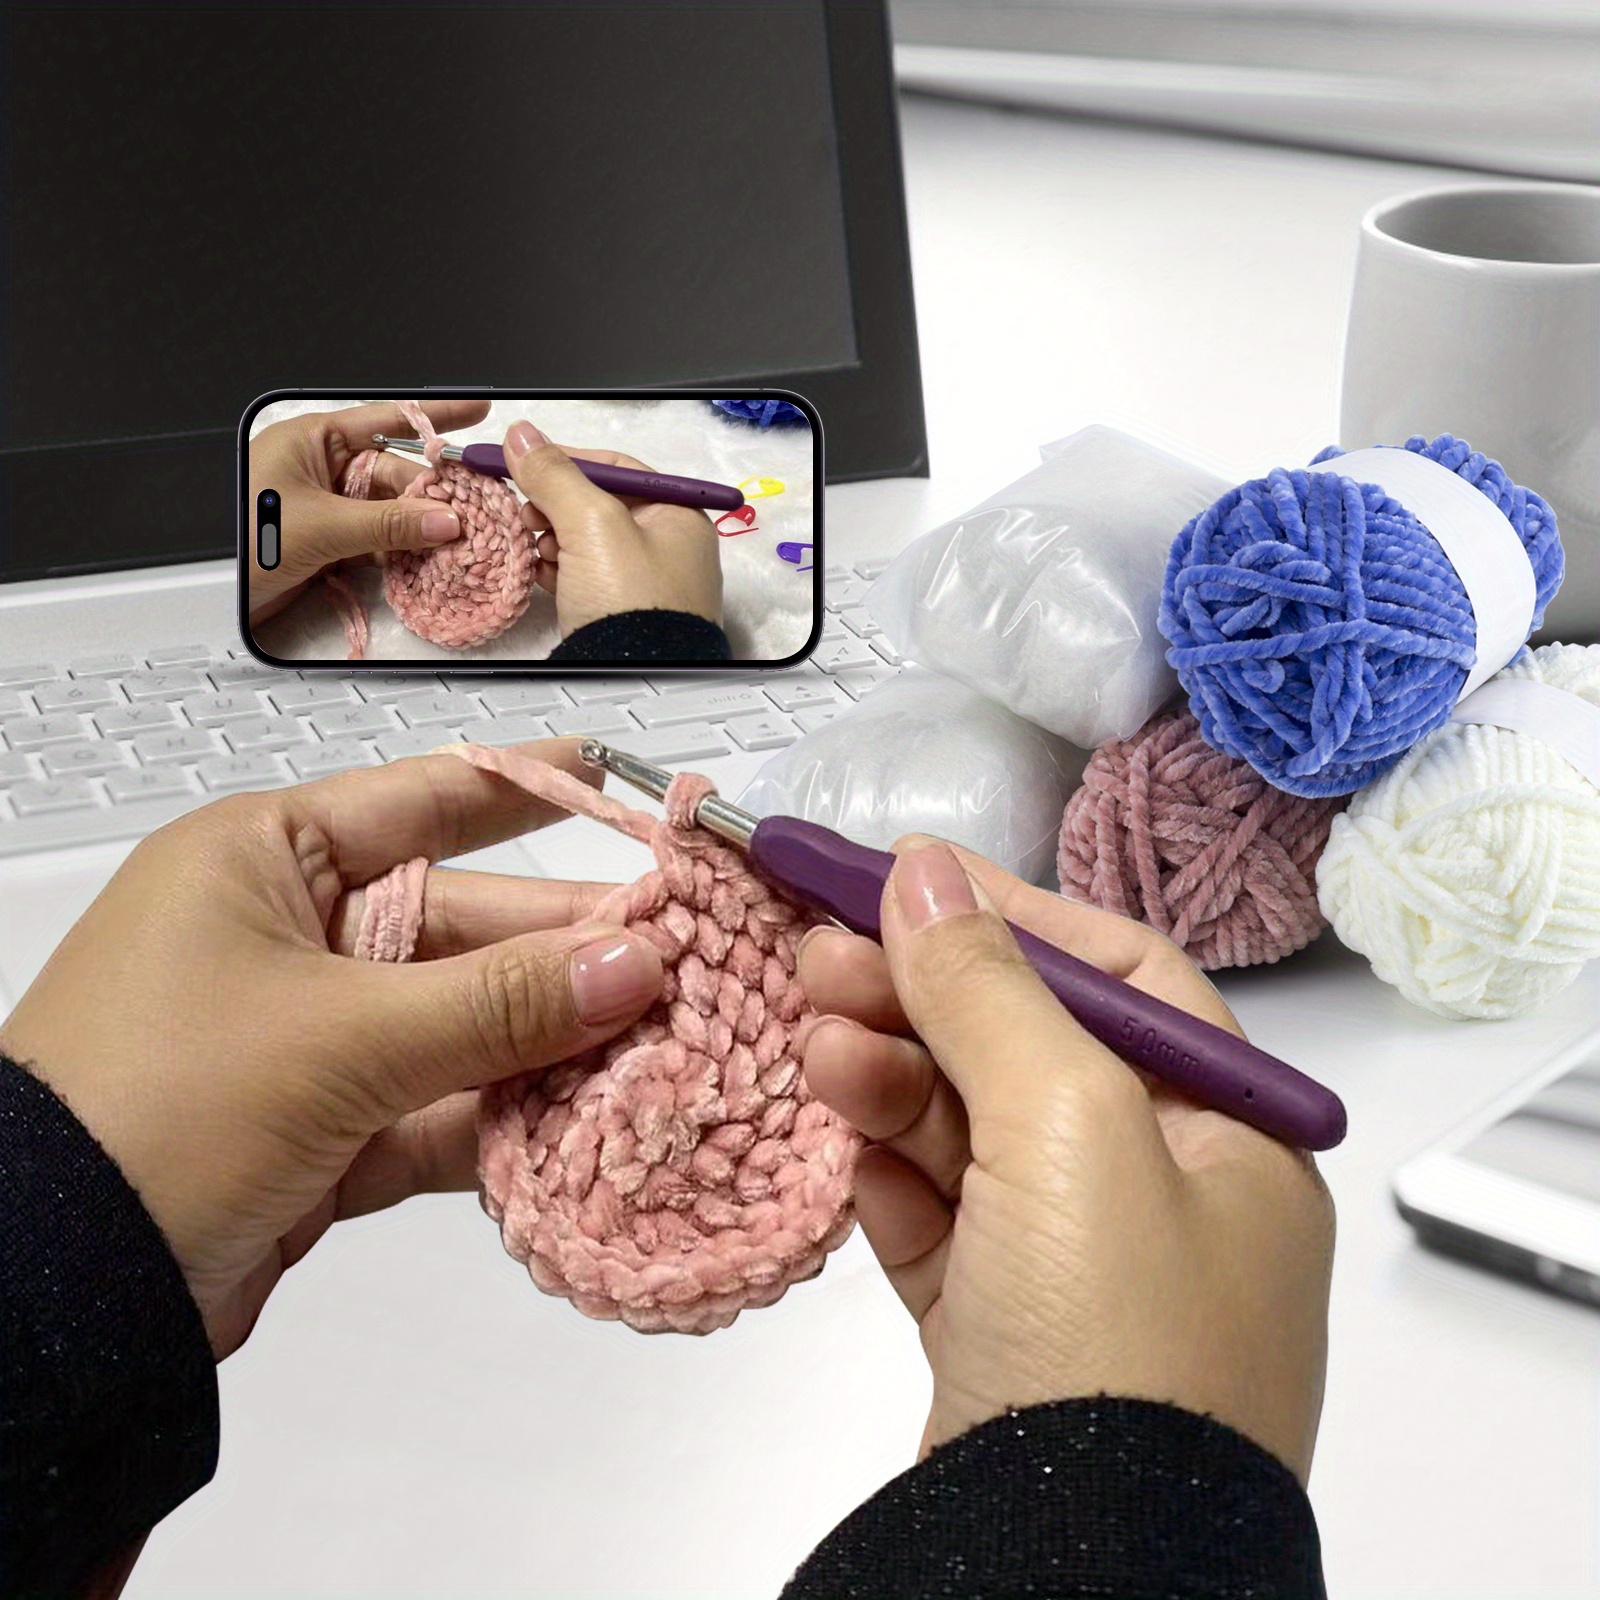 1set Kit Crochet Material Diseñado Principiantes Adecuado - Temu Chile